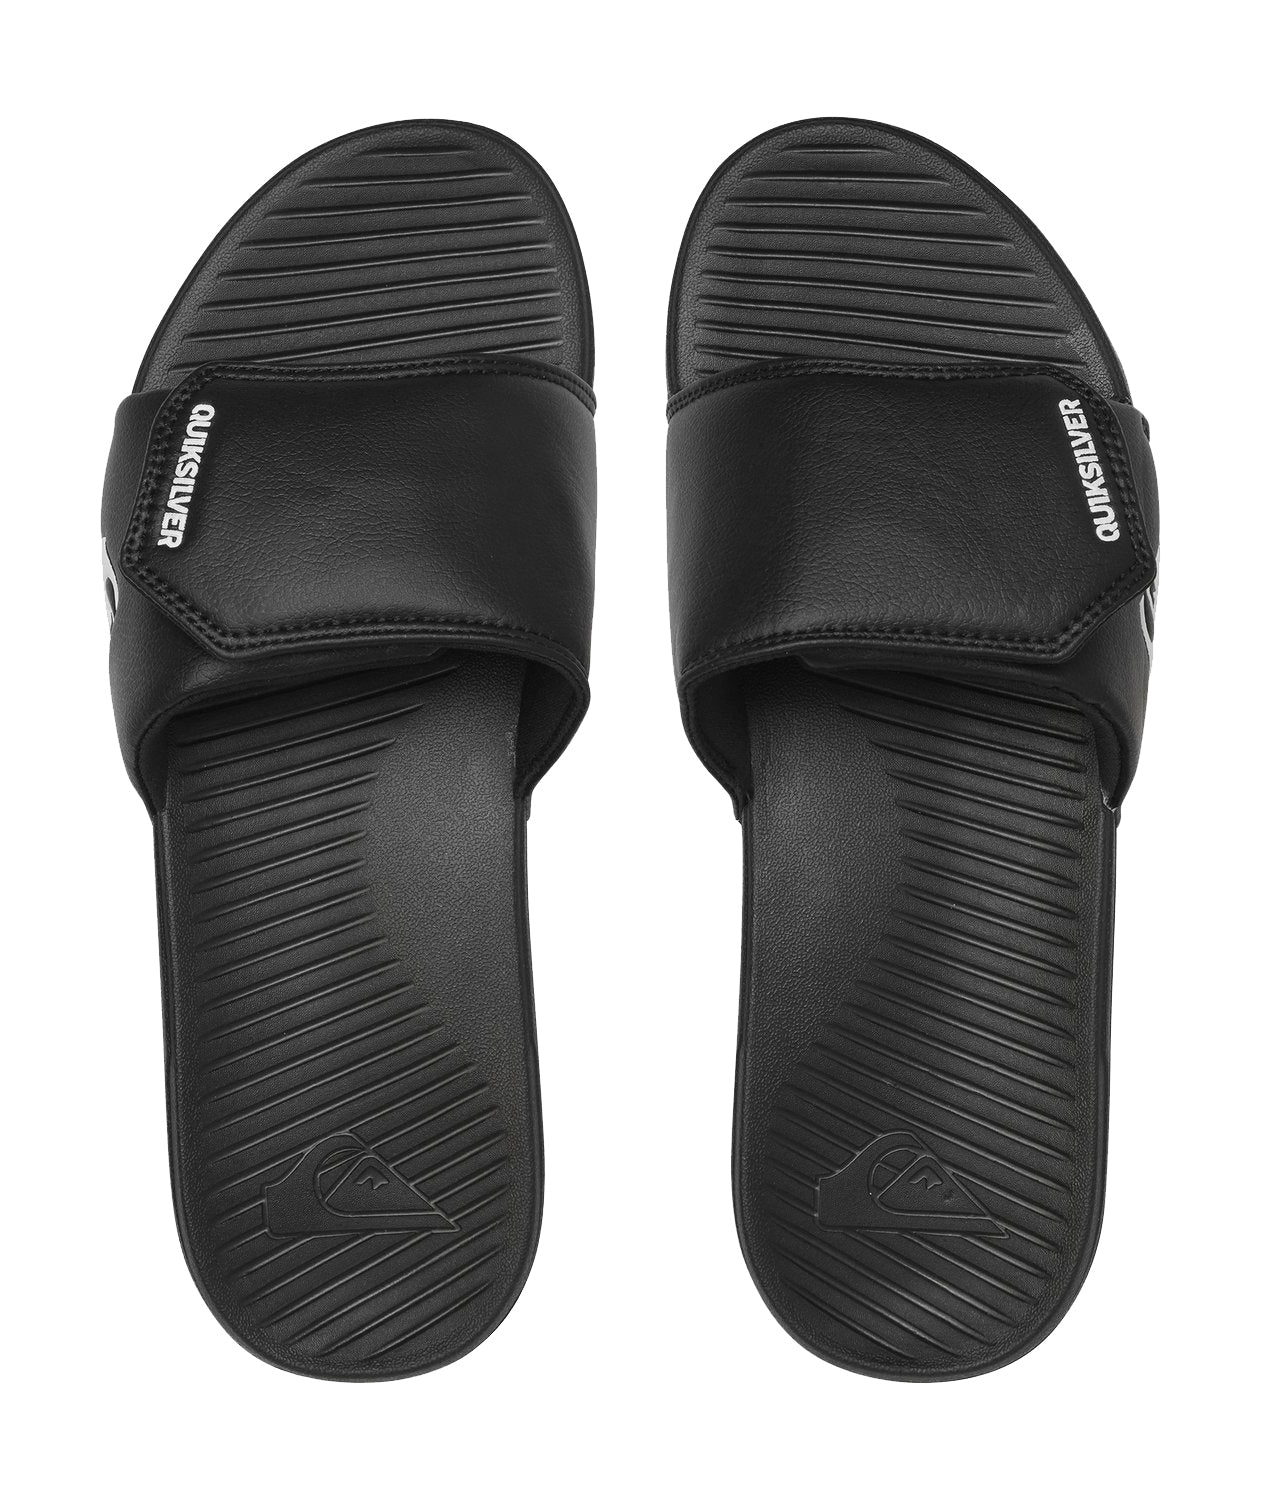 Quiksilver Bright Coast Adjust Mens Sandal XKWK-Black-White-Black 13